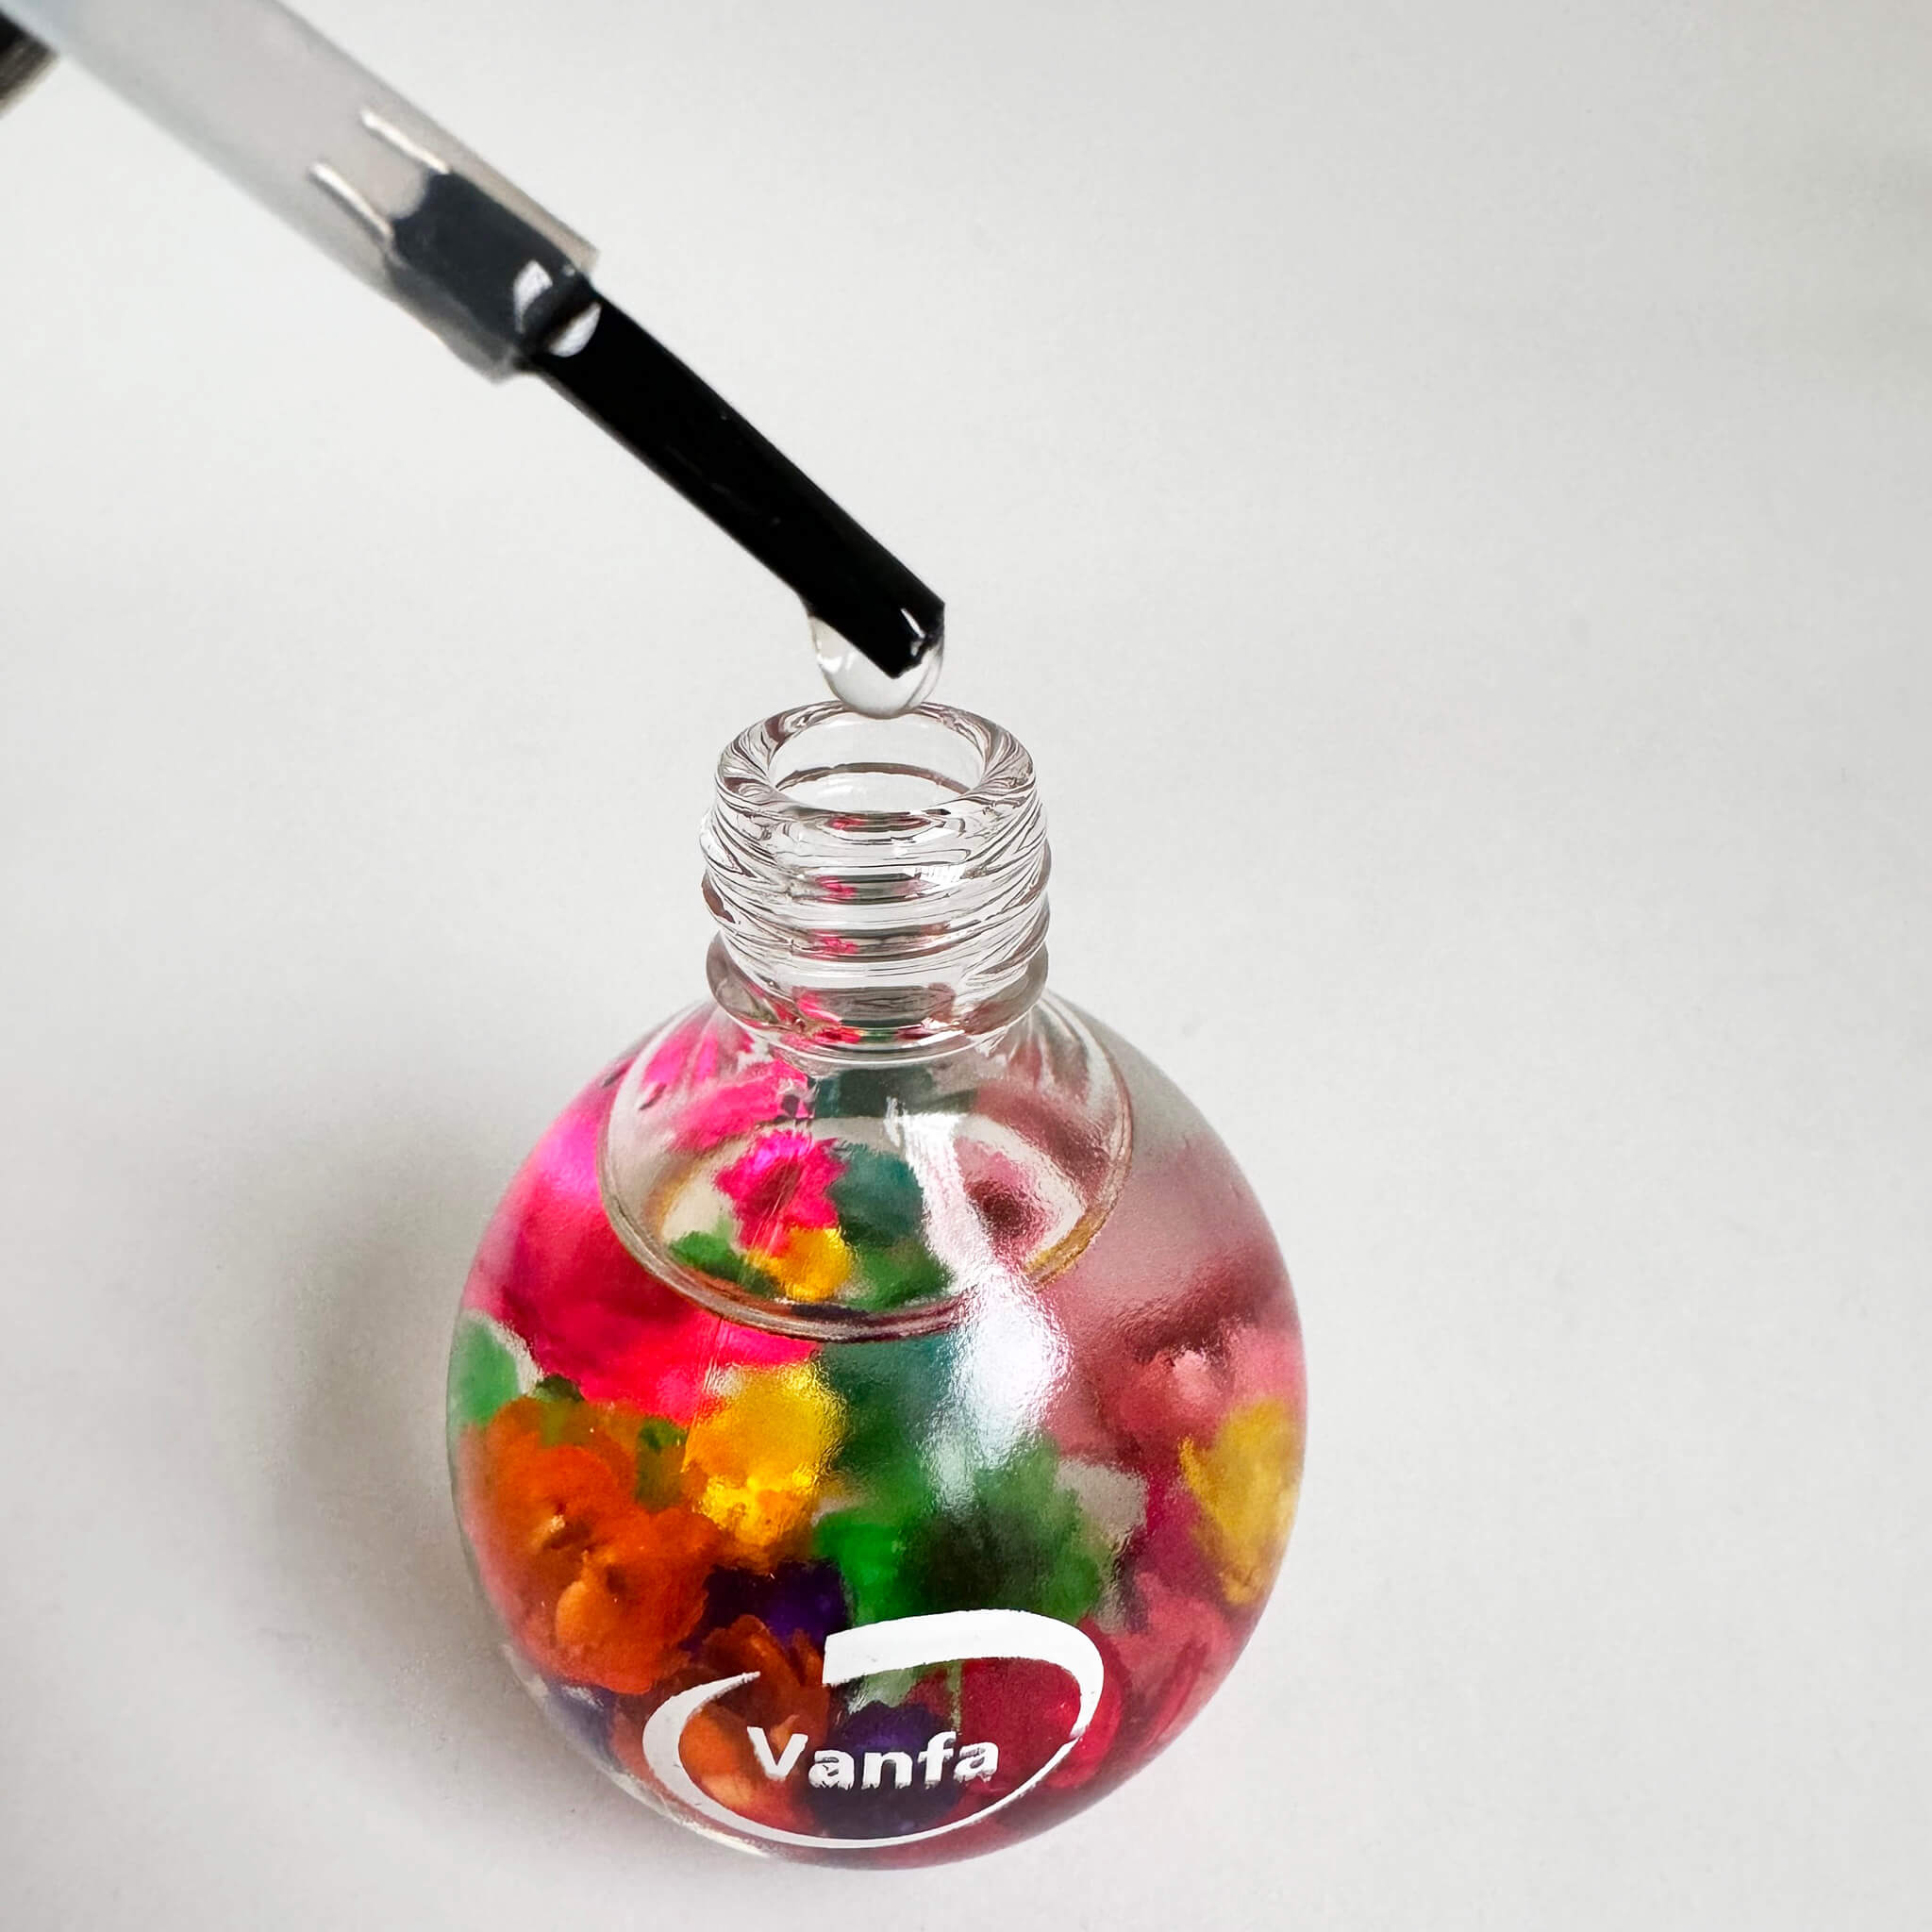 VANFA Cuticle Oil infused with real flower 0.42 Oz - Apple